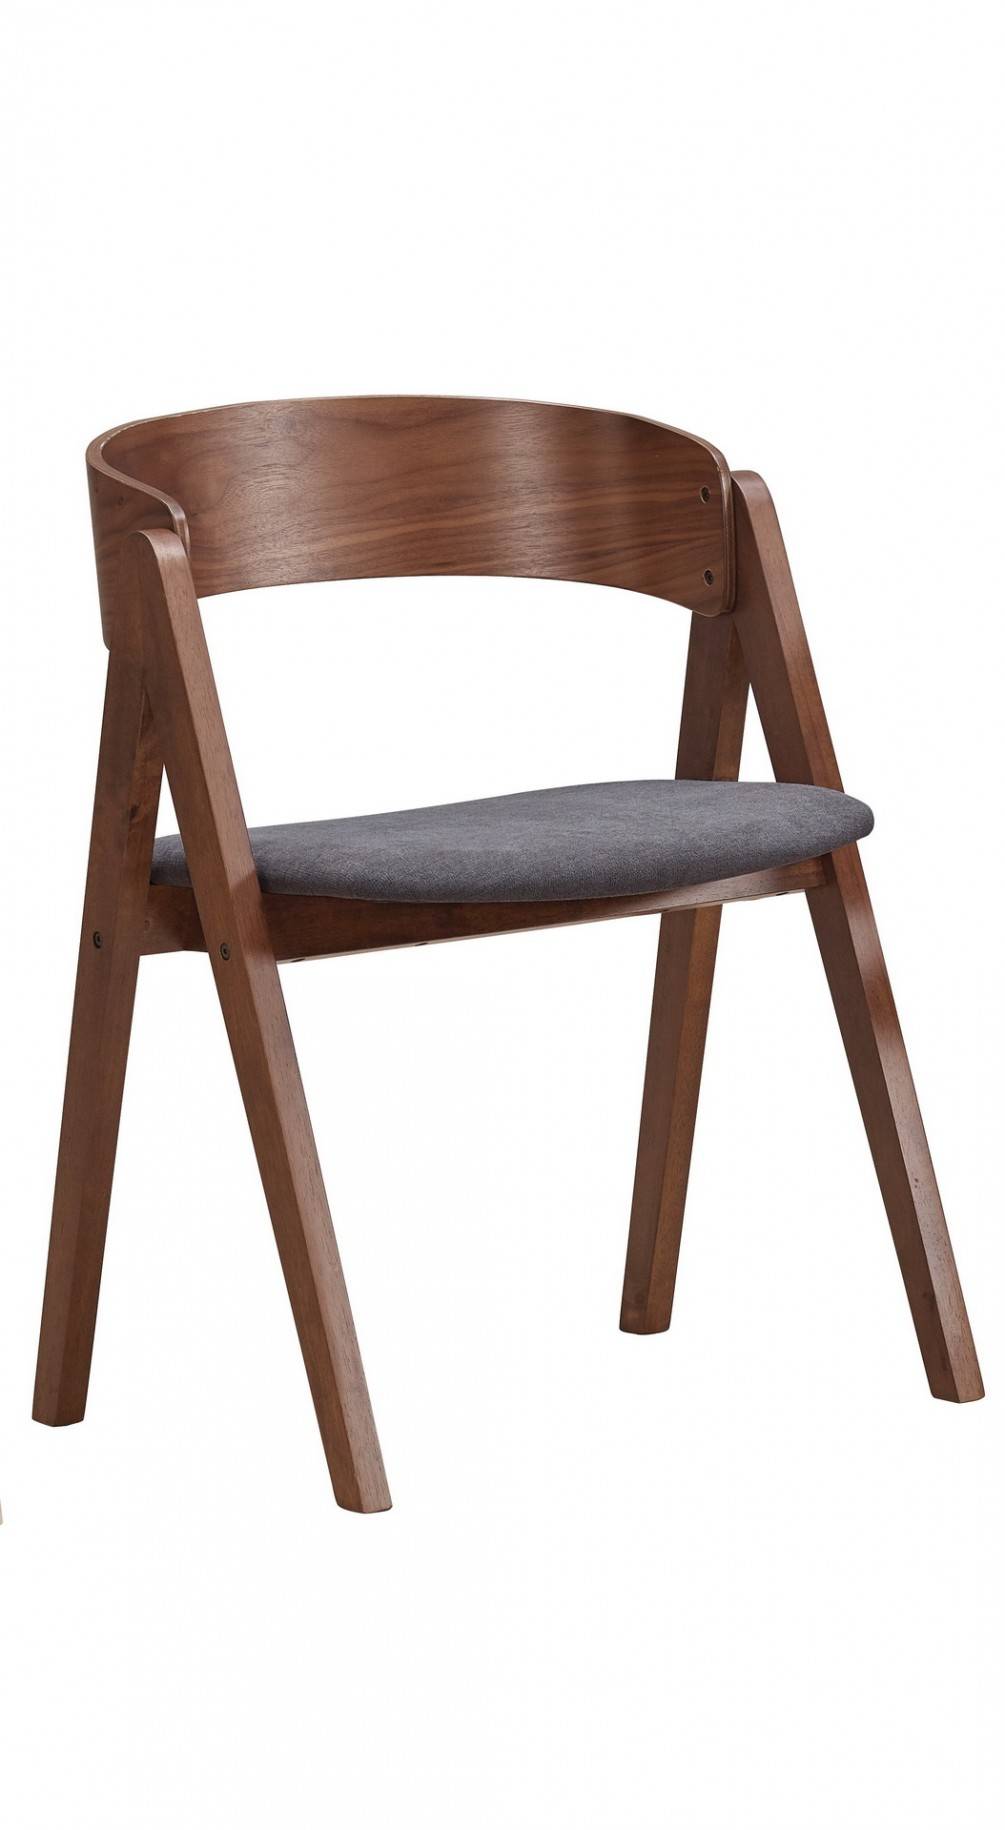 QM-641-11 特威爾餐椅(布)(實木) (不含其他產品)<br /> 尺寸:寬57.5*深52.5*高75cm